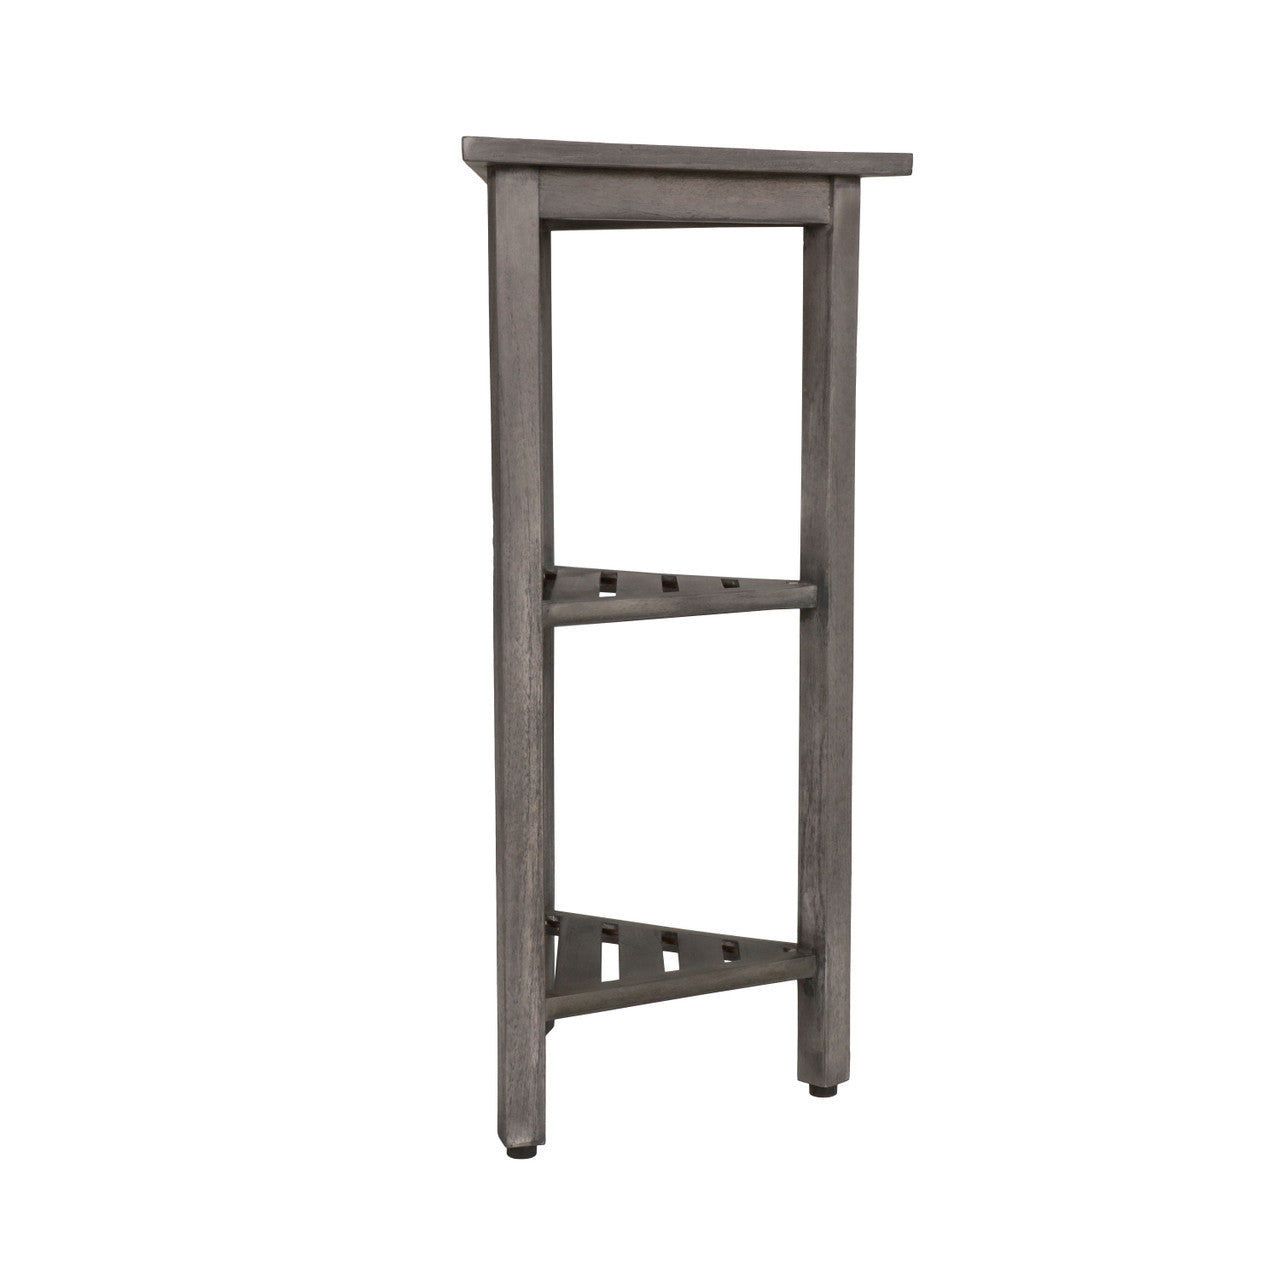 CoastalVogue® FlexiCorner® 32" Teak Wood 3-Tier Corner Shelf in Antique Gray Finish